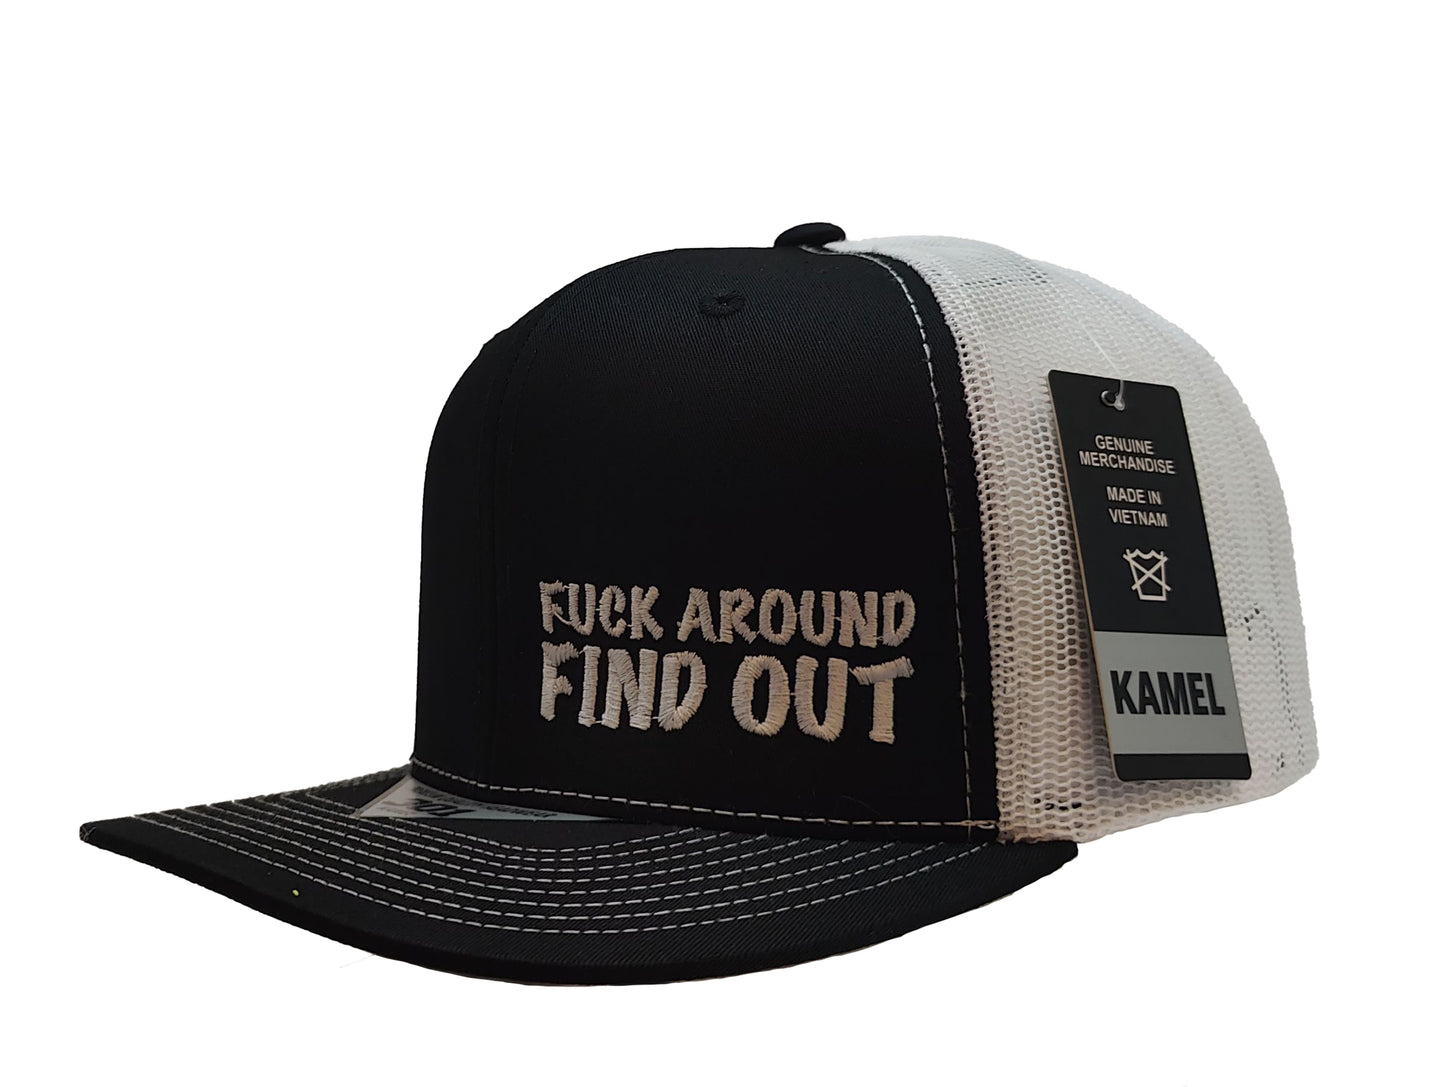 FUCK AROUND FIND OUT Kamel Adult Flat Bill Hat 301 Black / White